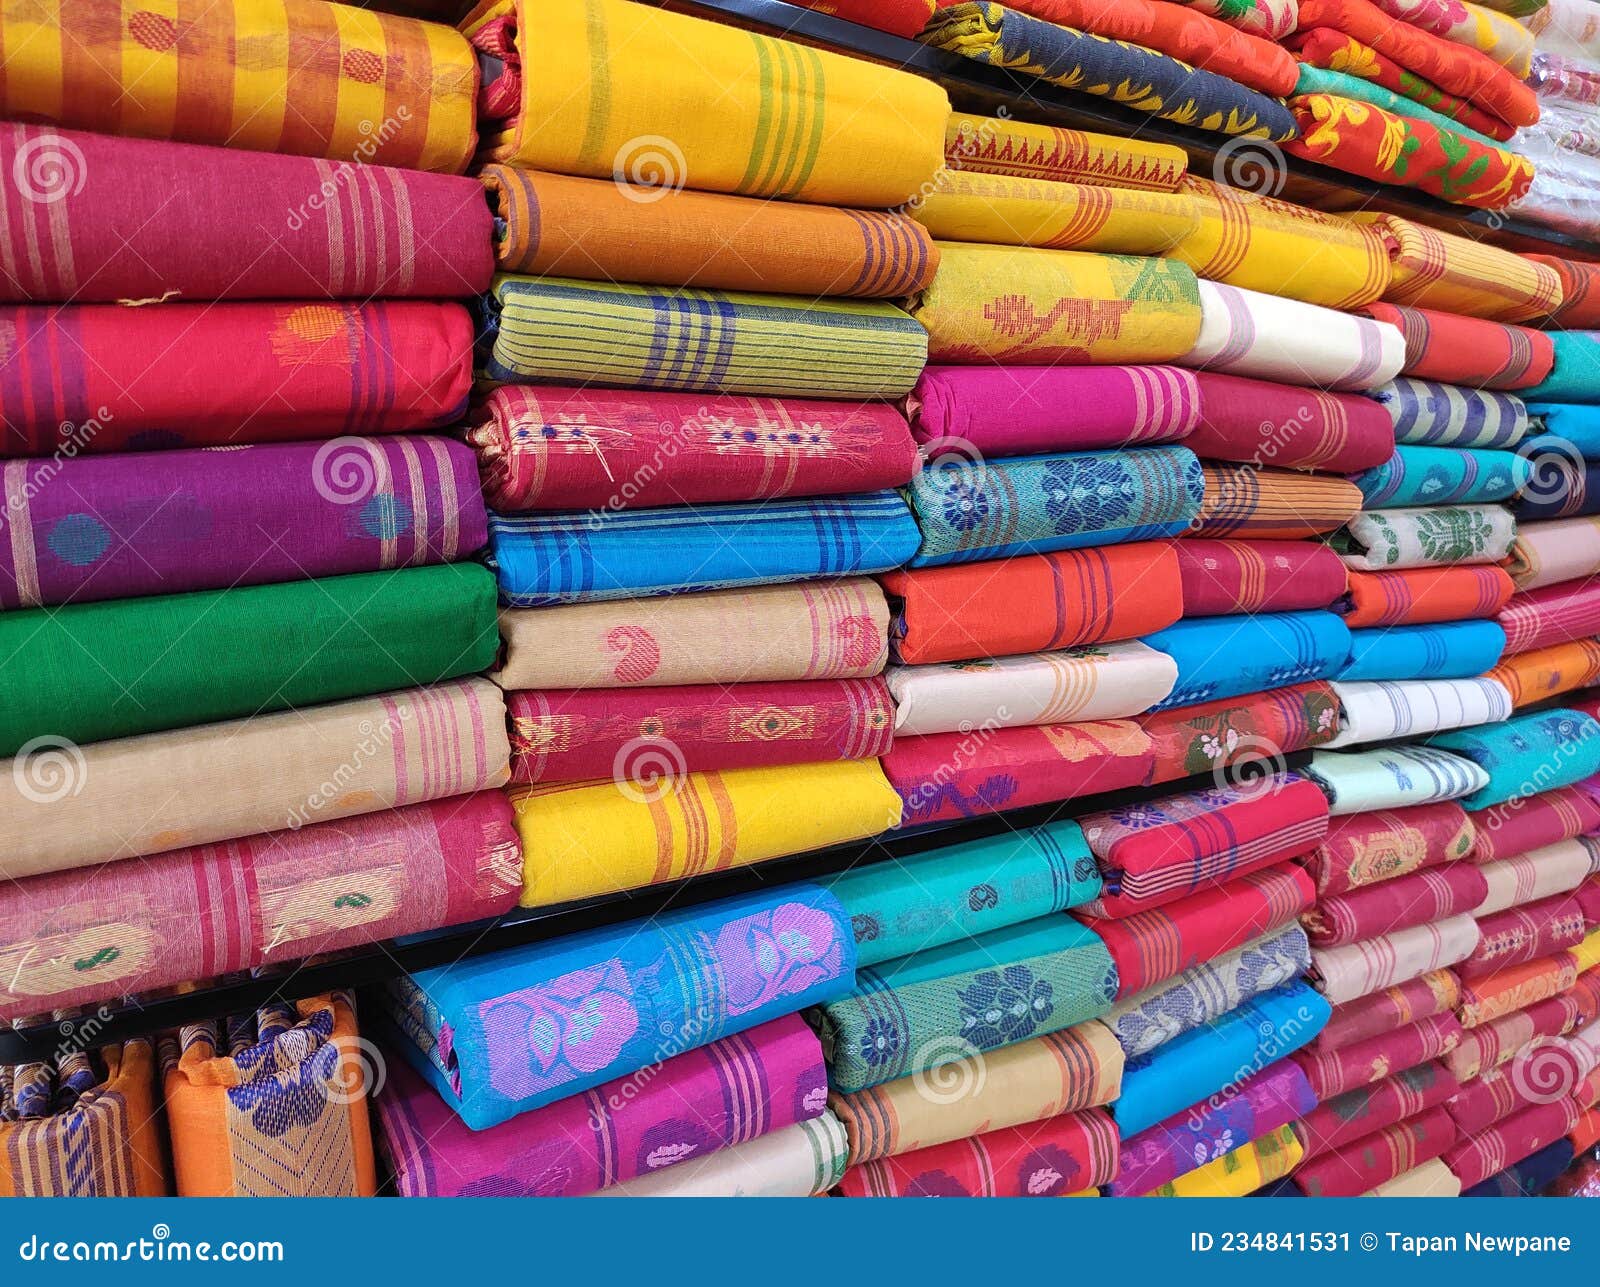 Colorful Pat Saree Textile Fabric Clothes Bundle Stock Image